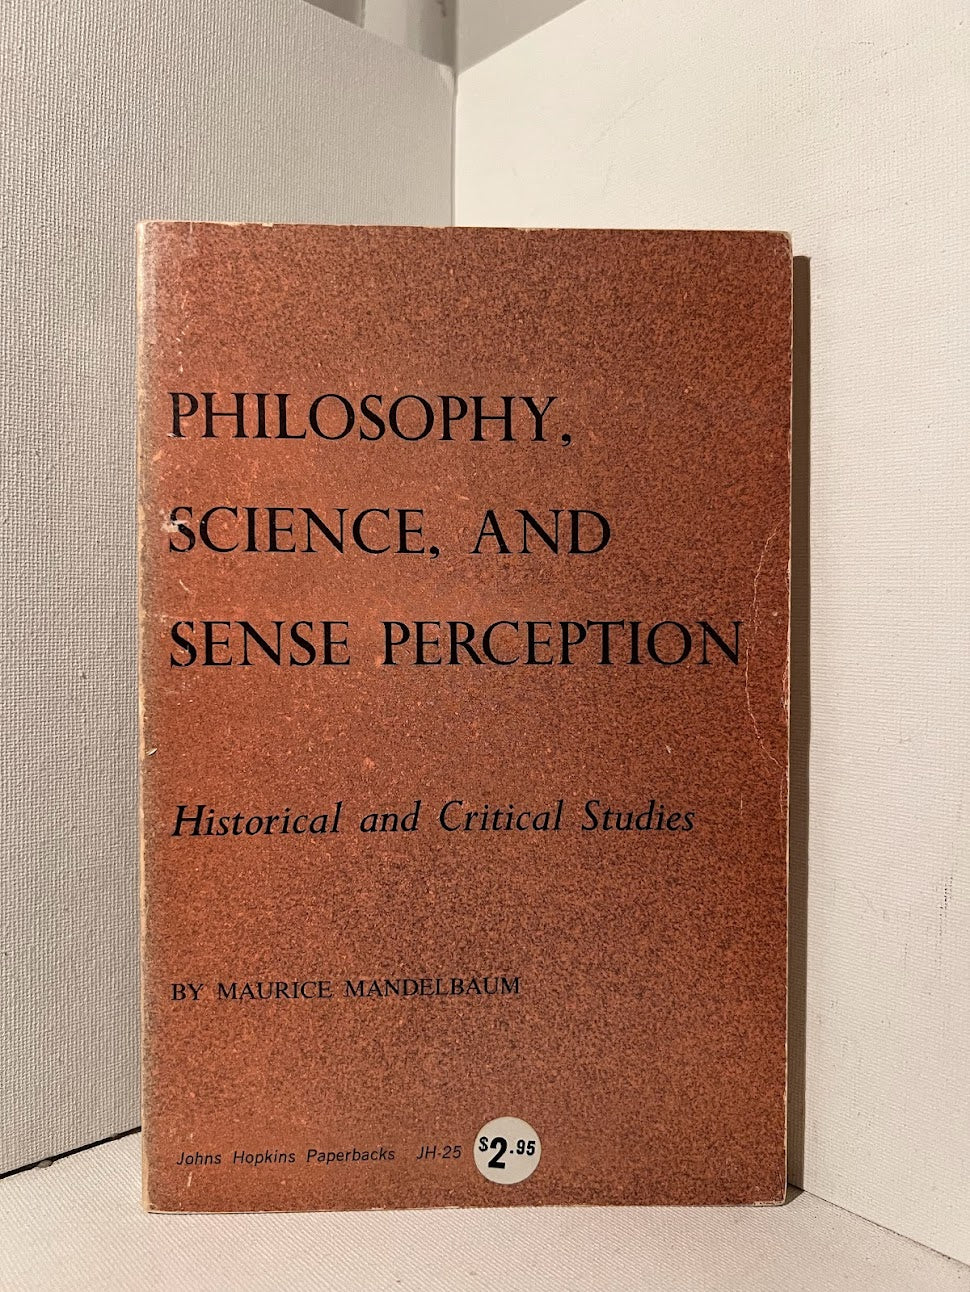 Philosophy, Science, and Sense Perception by Maurice Mandelbaum